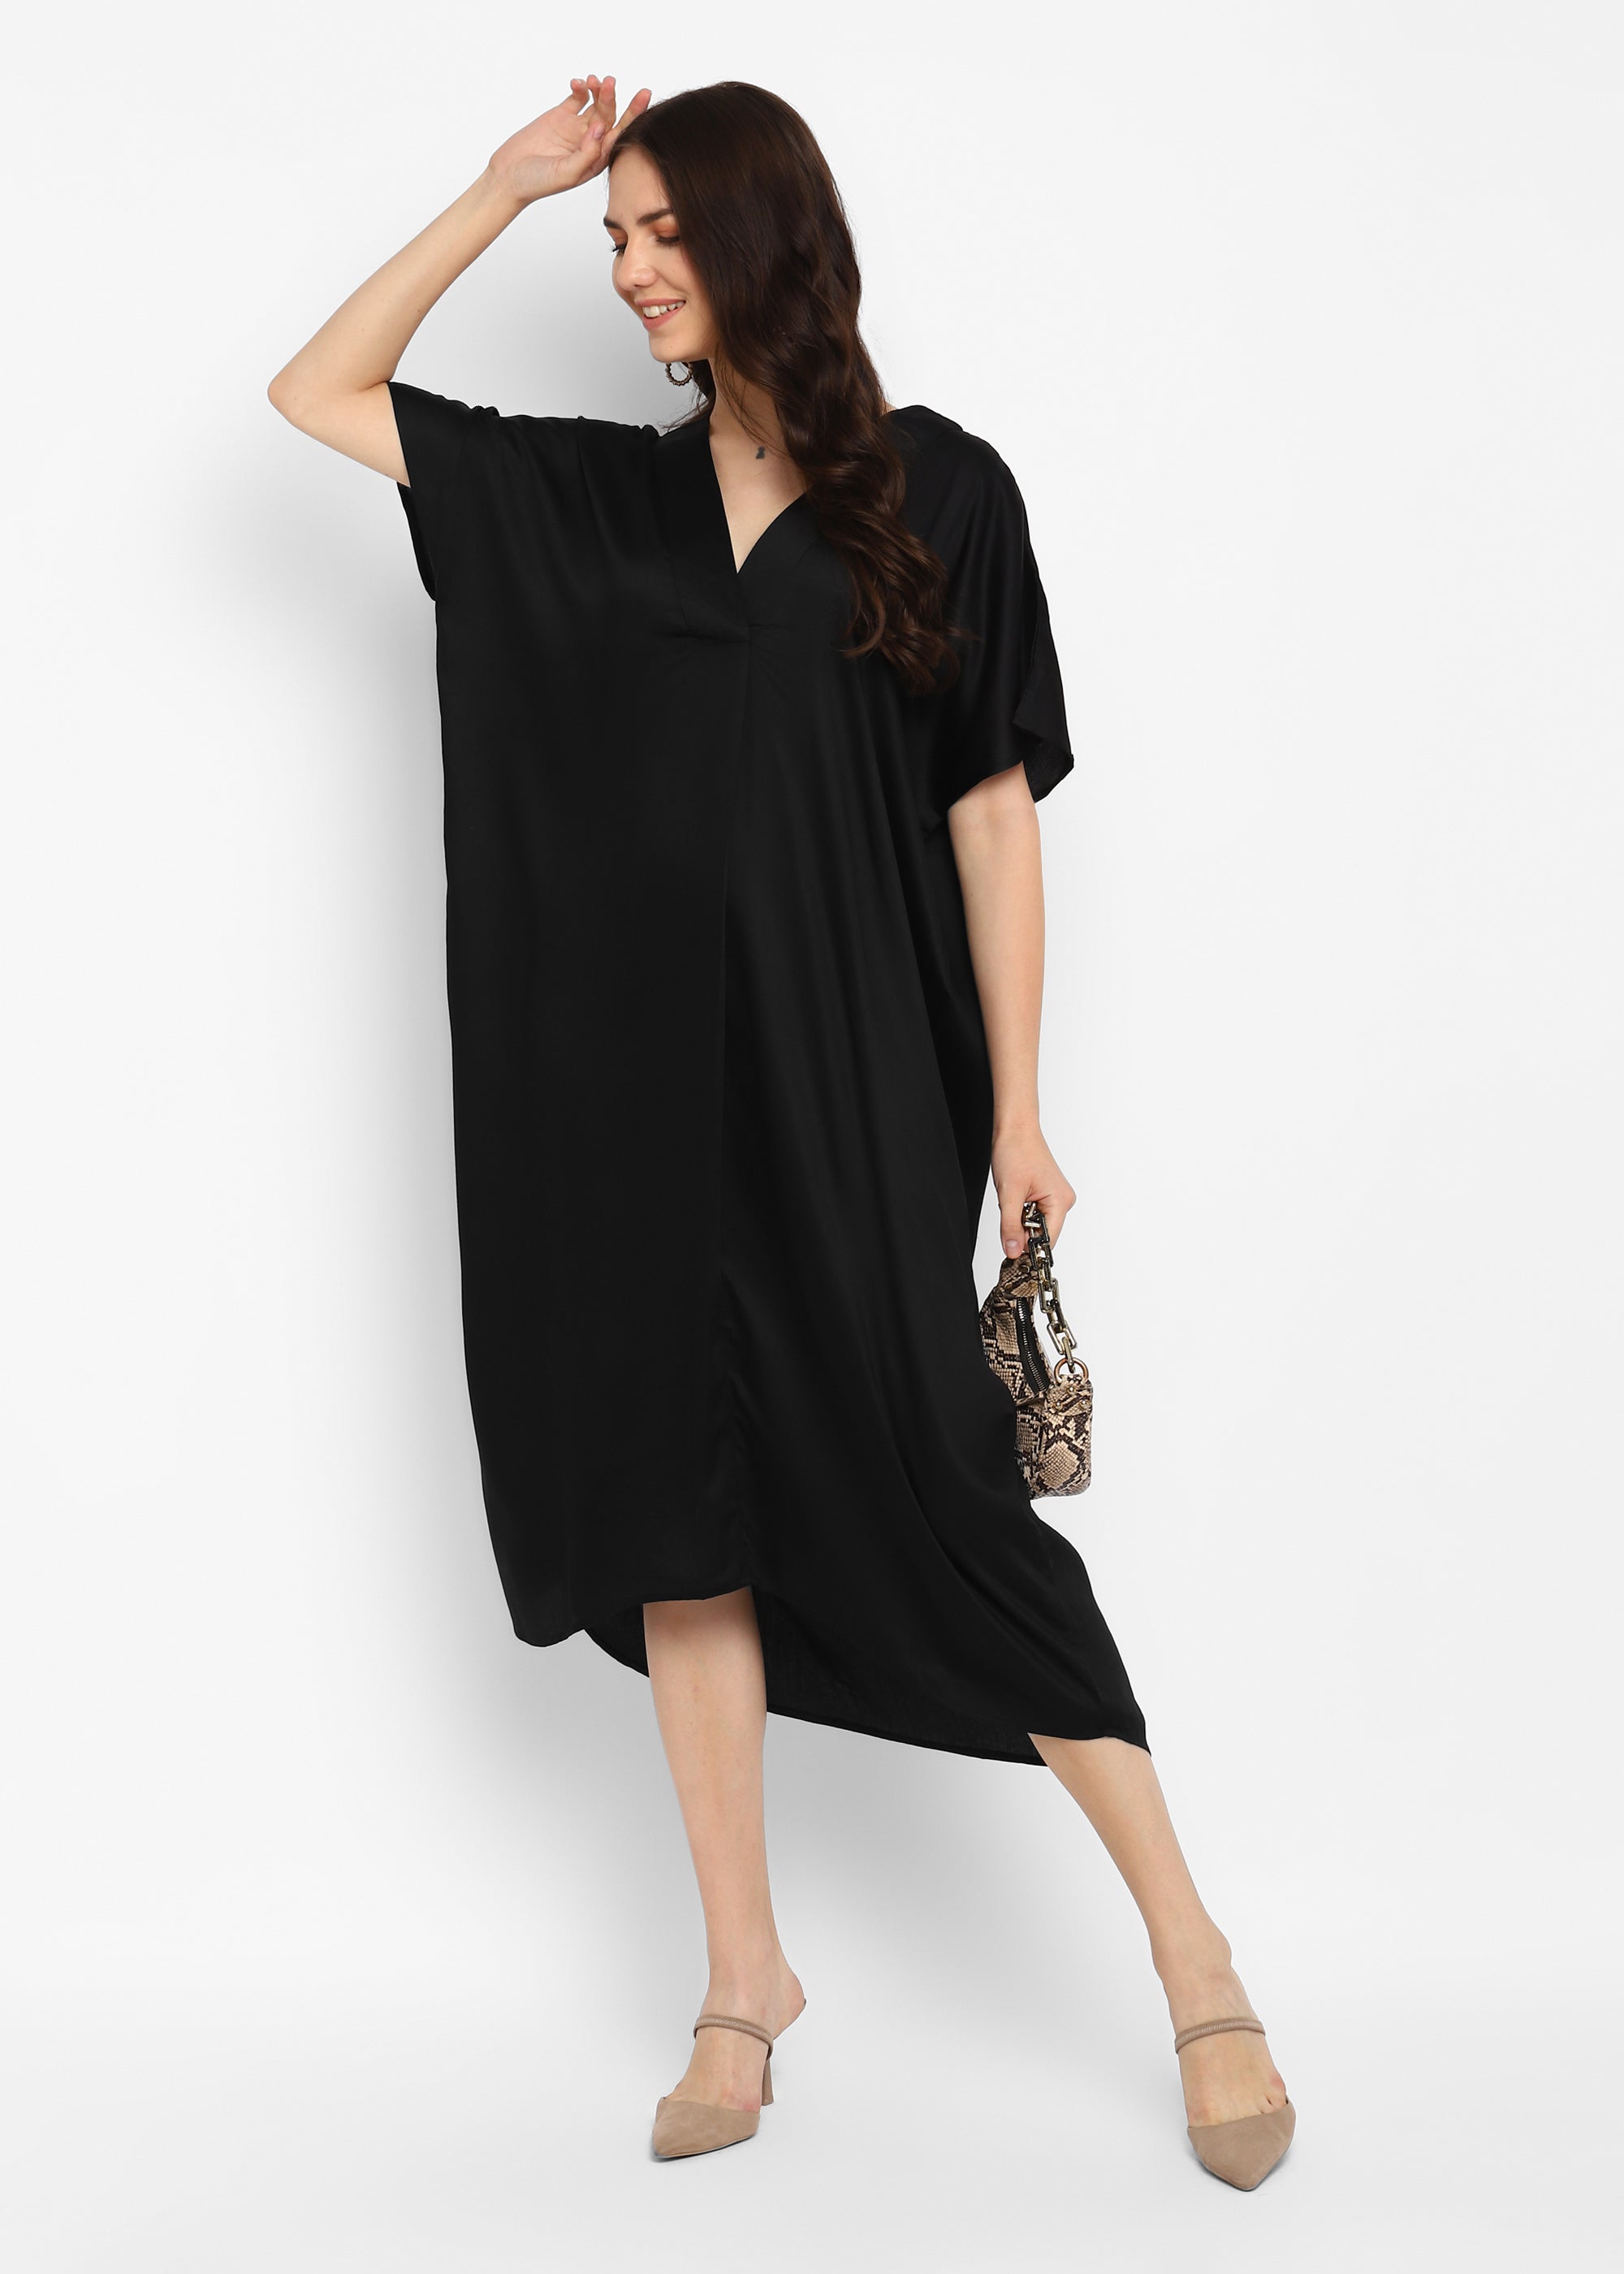 Ultra Soft Black Modal Long Kaftan Dress